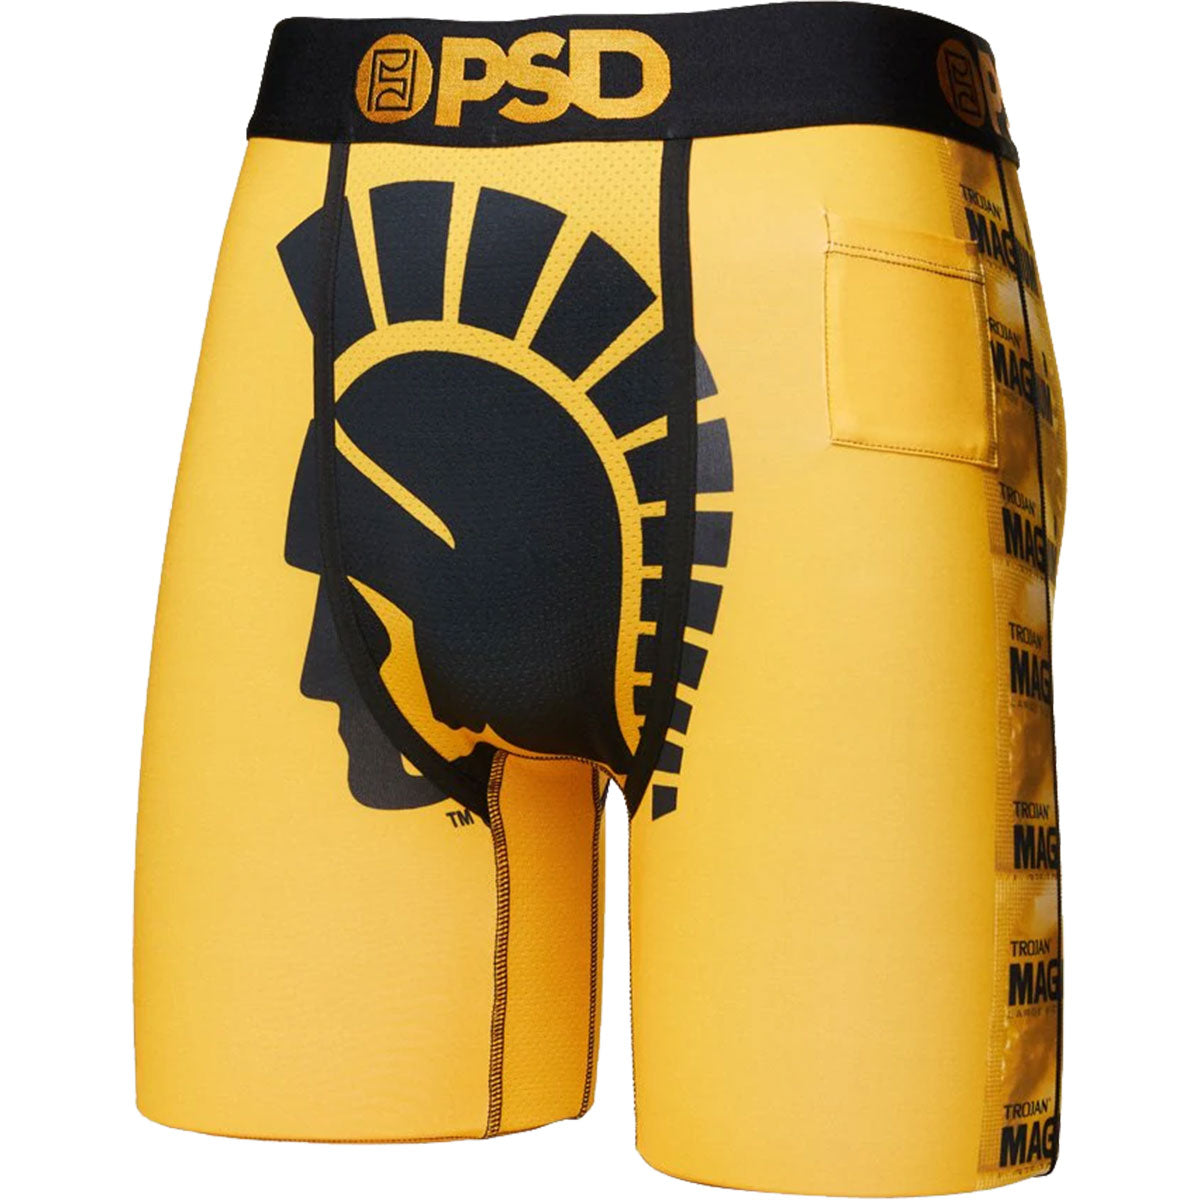 PSD Trojan Man Boxer Men's Bottom Underwear (Refurbished, Without Tags –